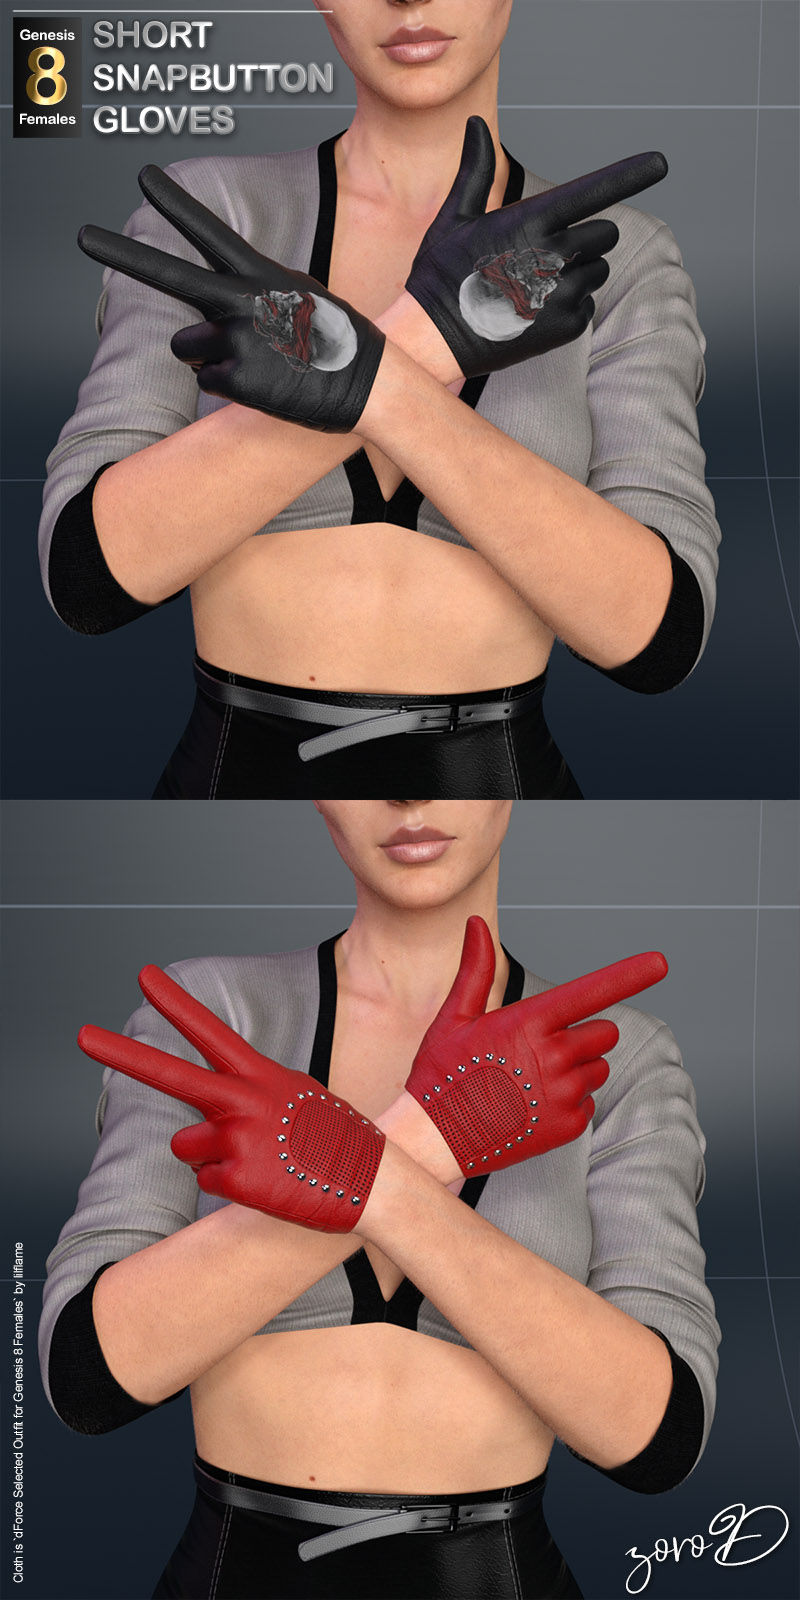 Short Snapbutton Gloves For Genesis 8 Females